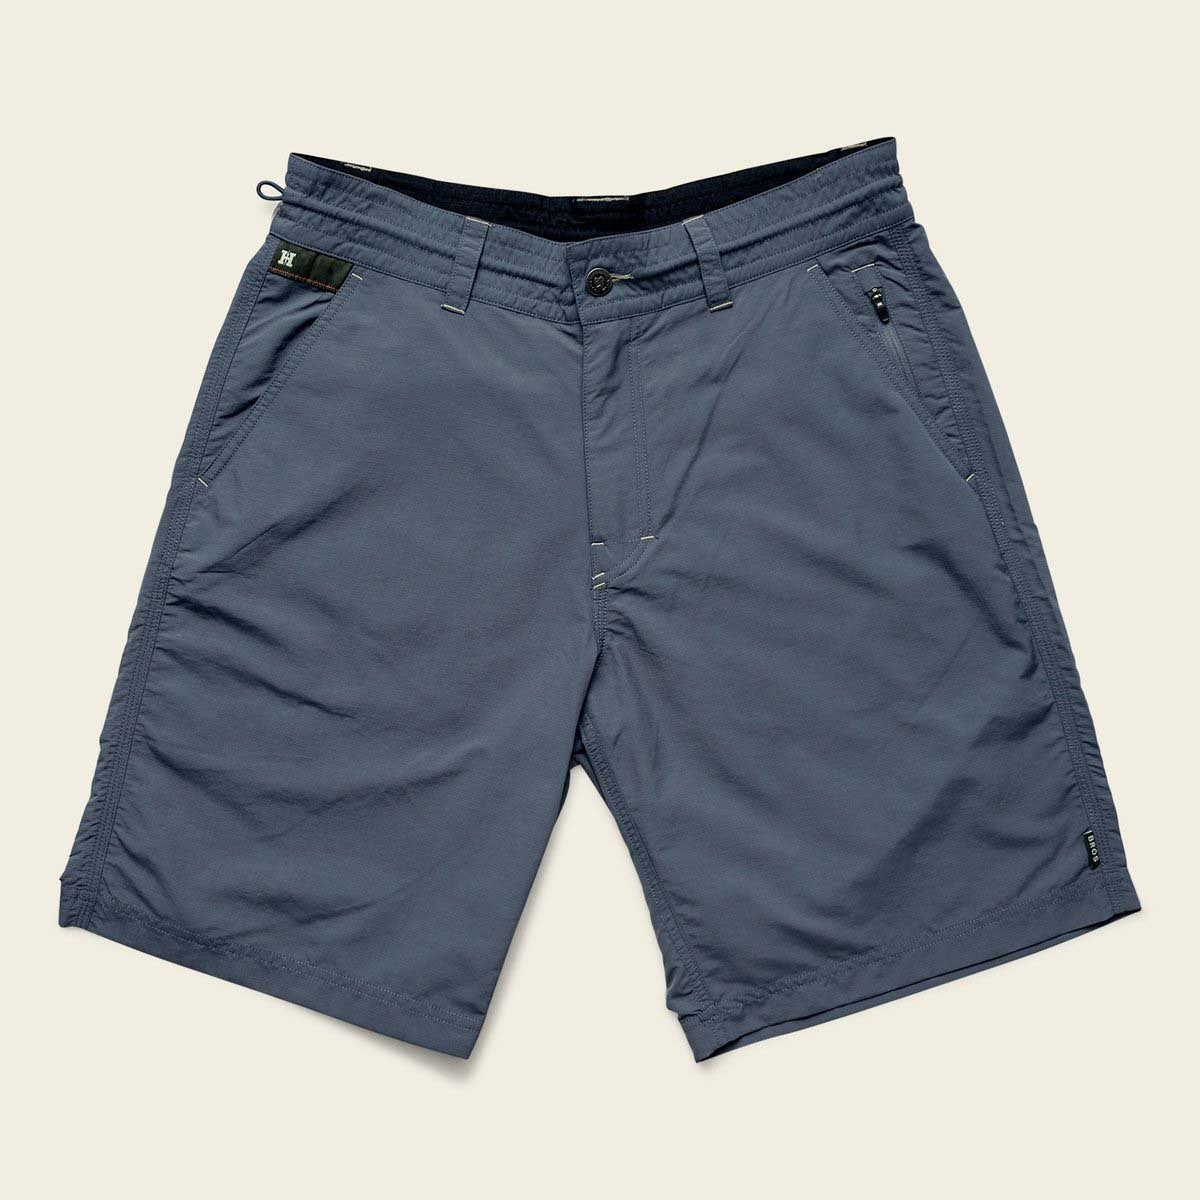 Horizon Hybrid Shorts 2.0